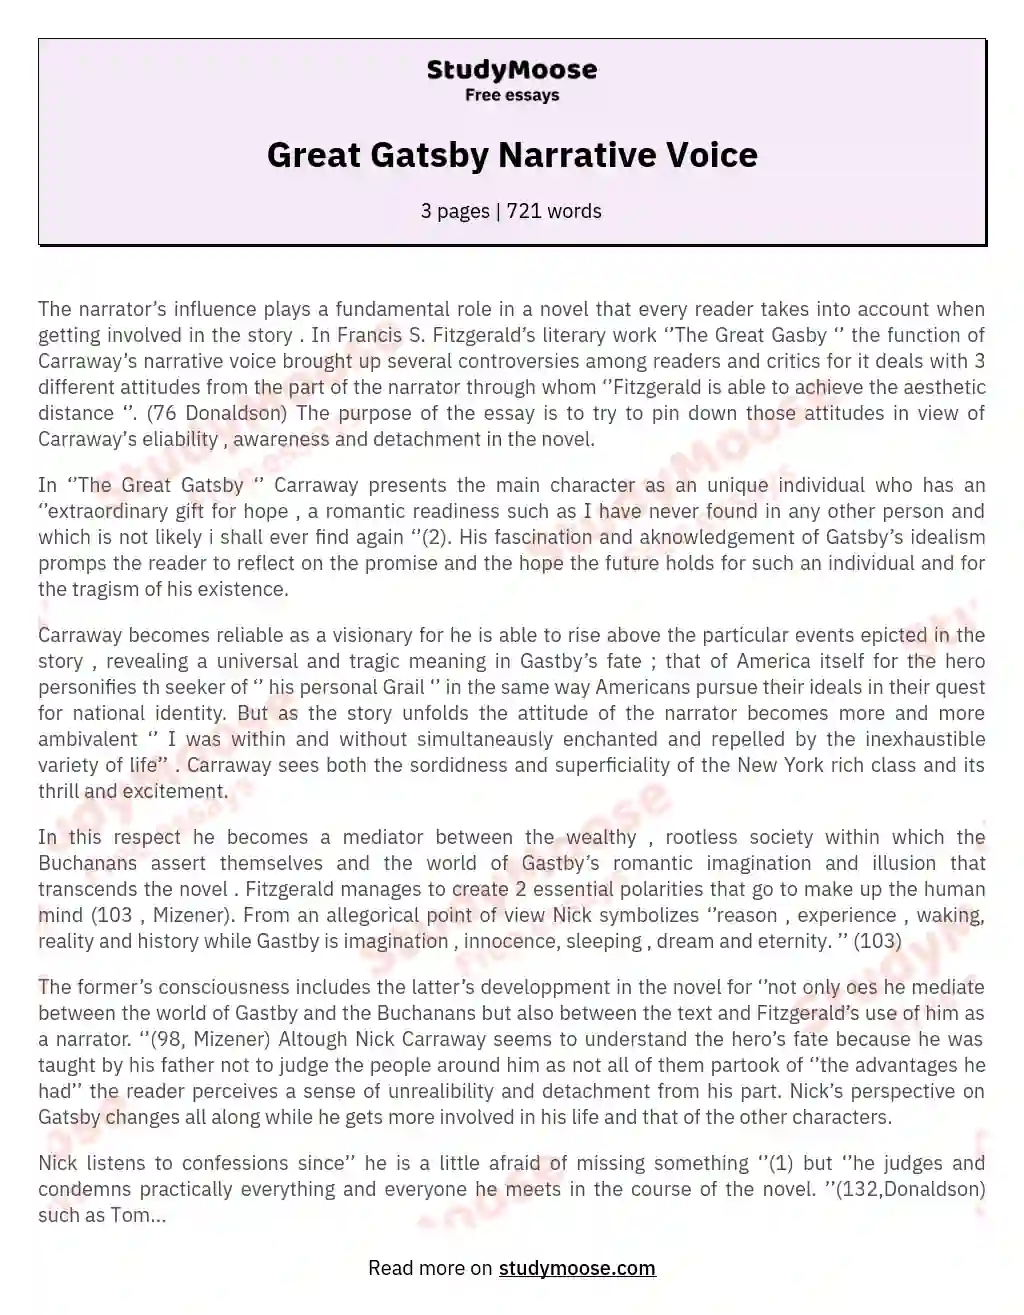 Great Gatsby Narrative Voice essay